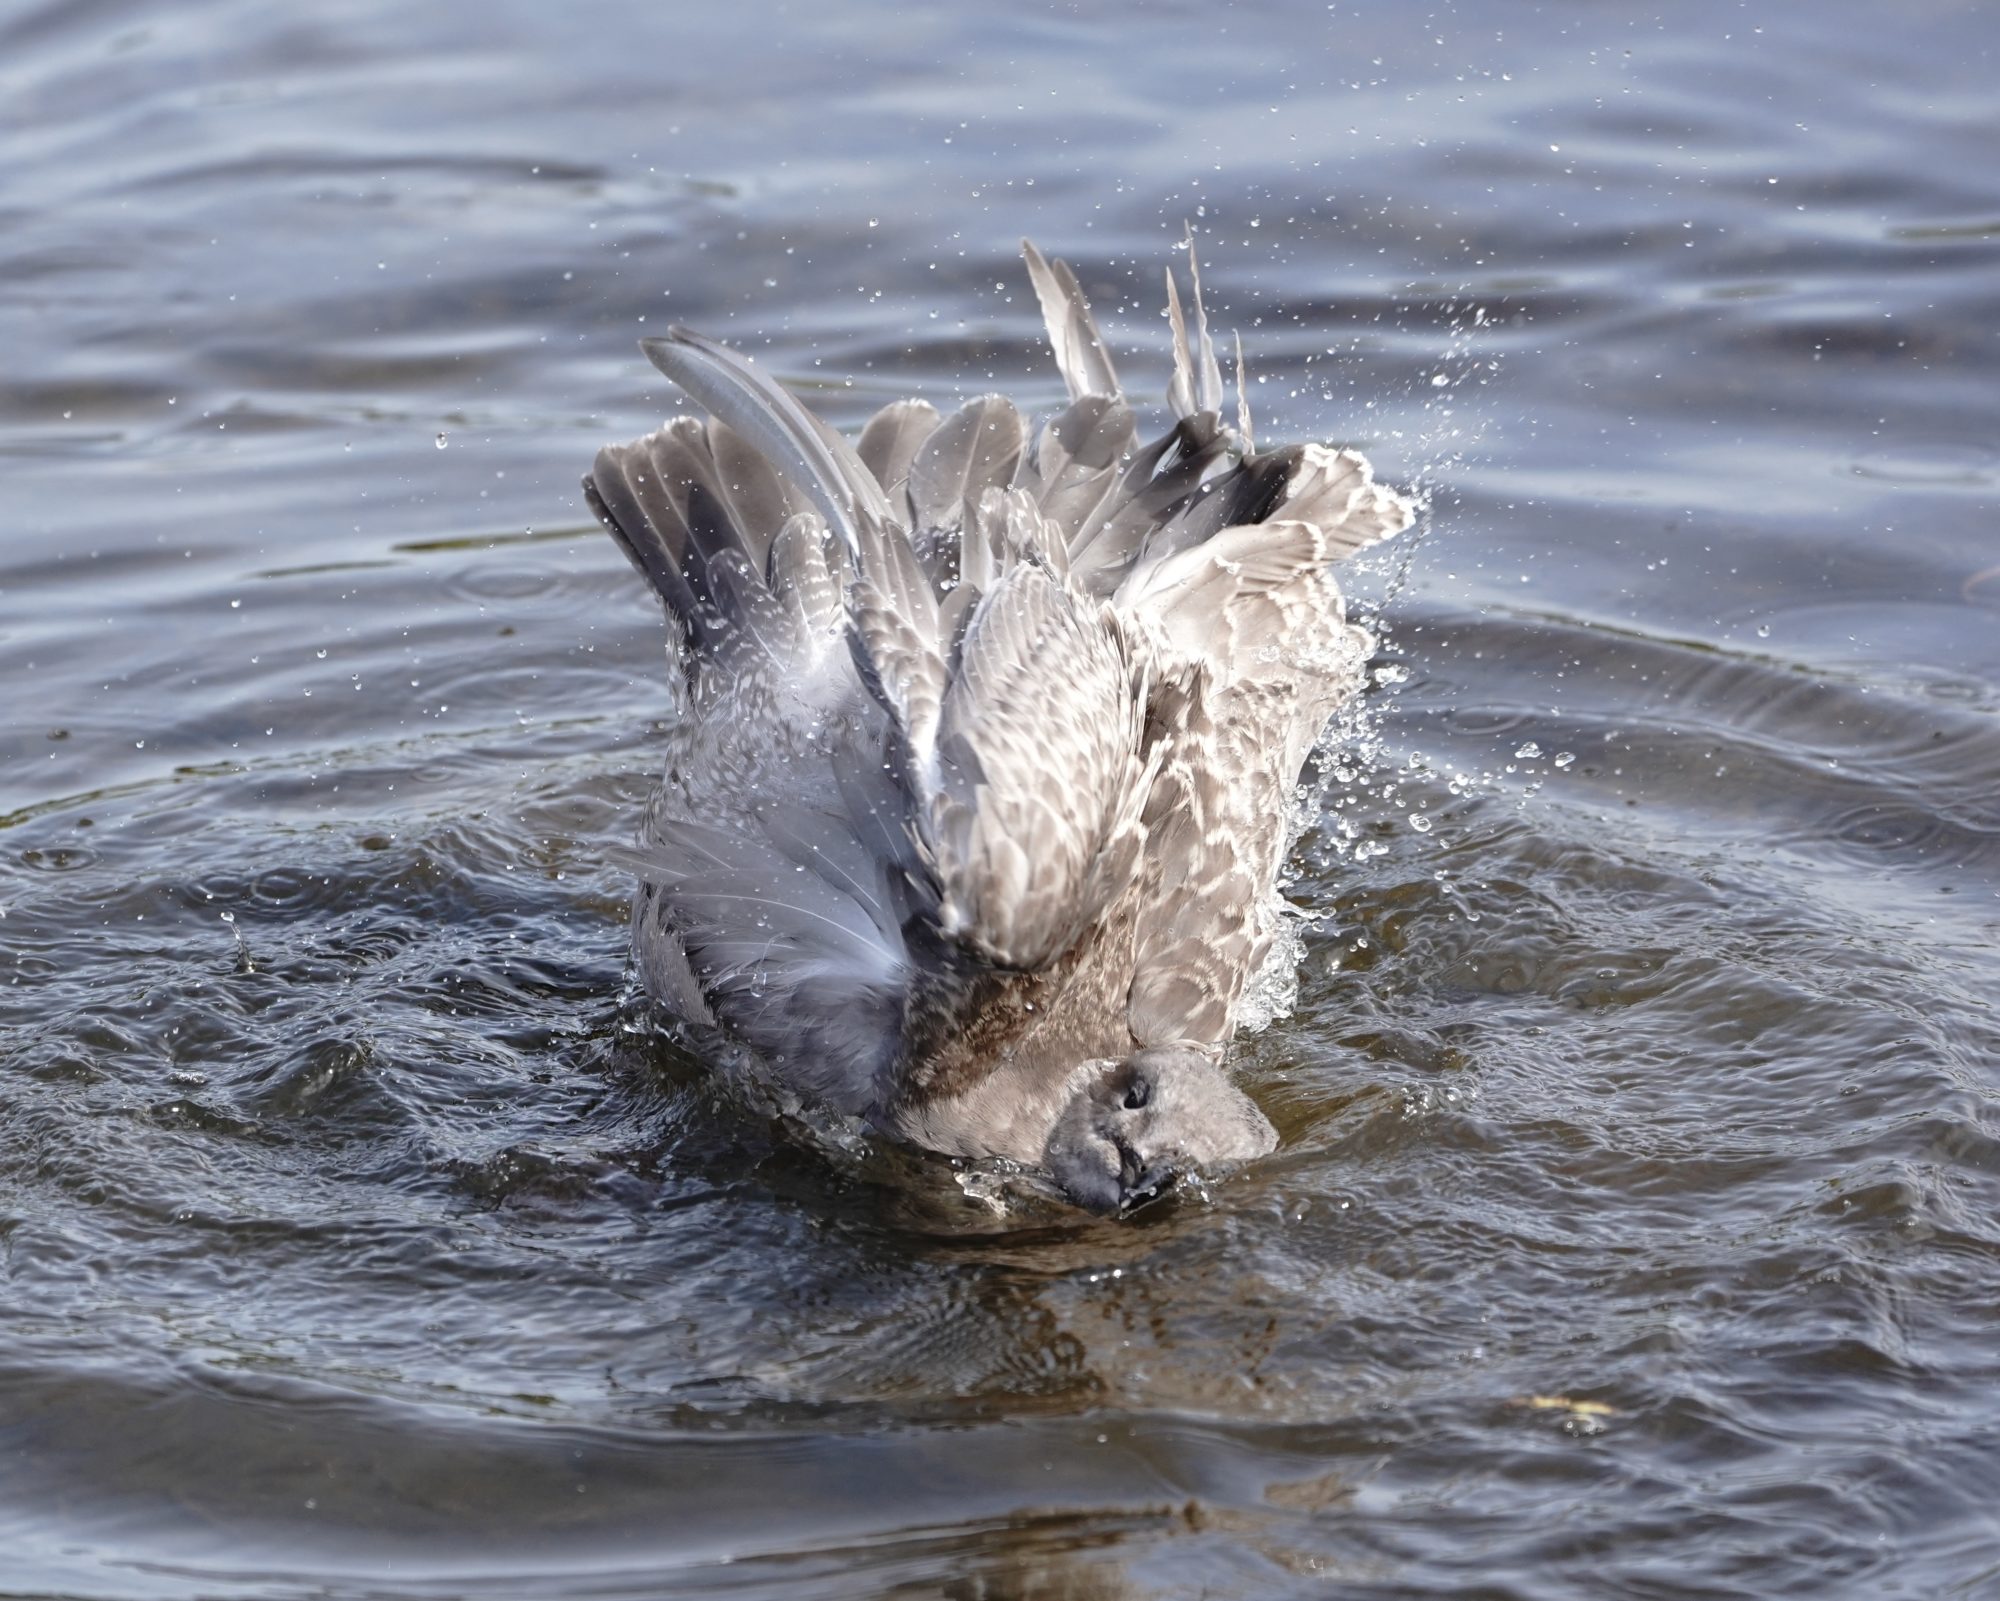 Seagull splashing around